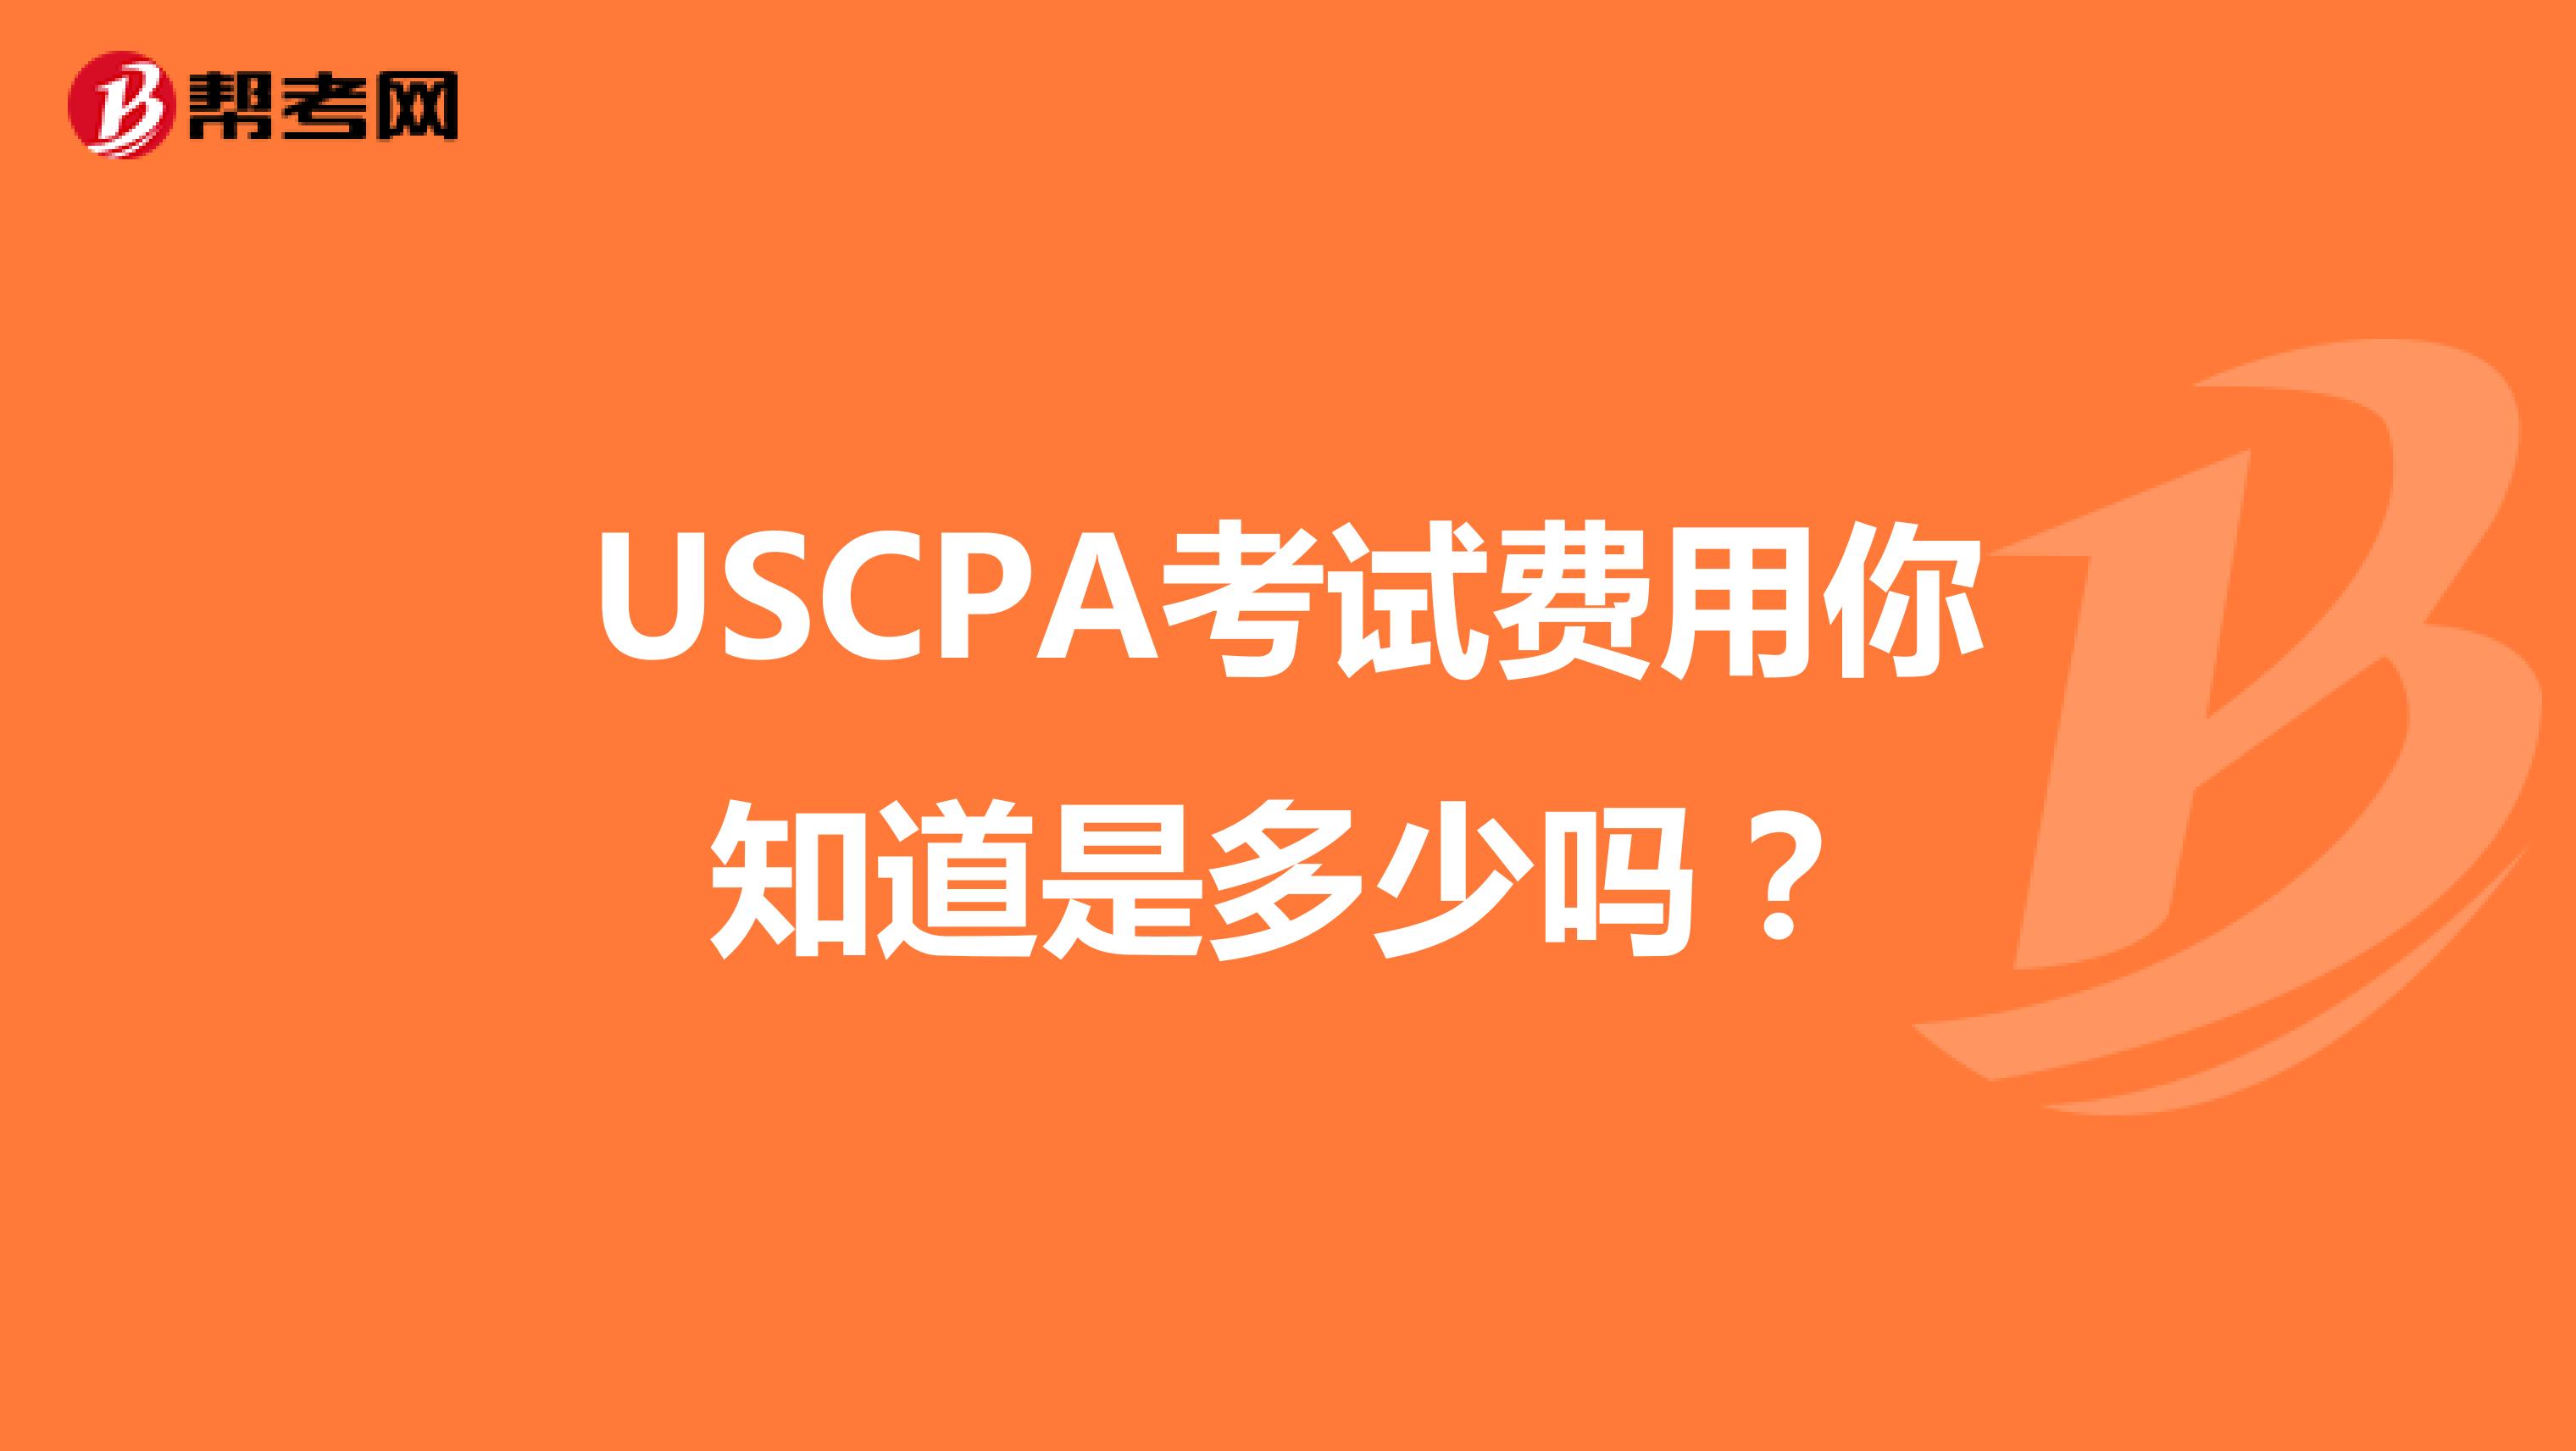 USCPA考试费用你知道是多少吗？